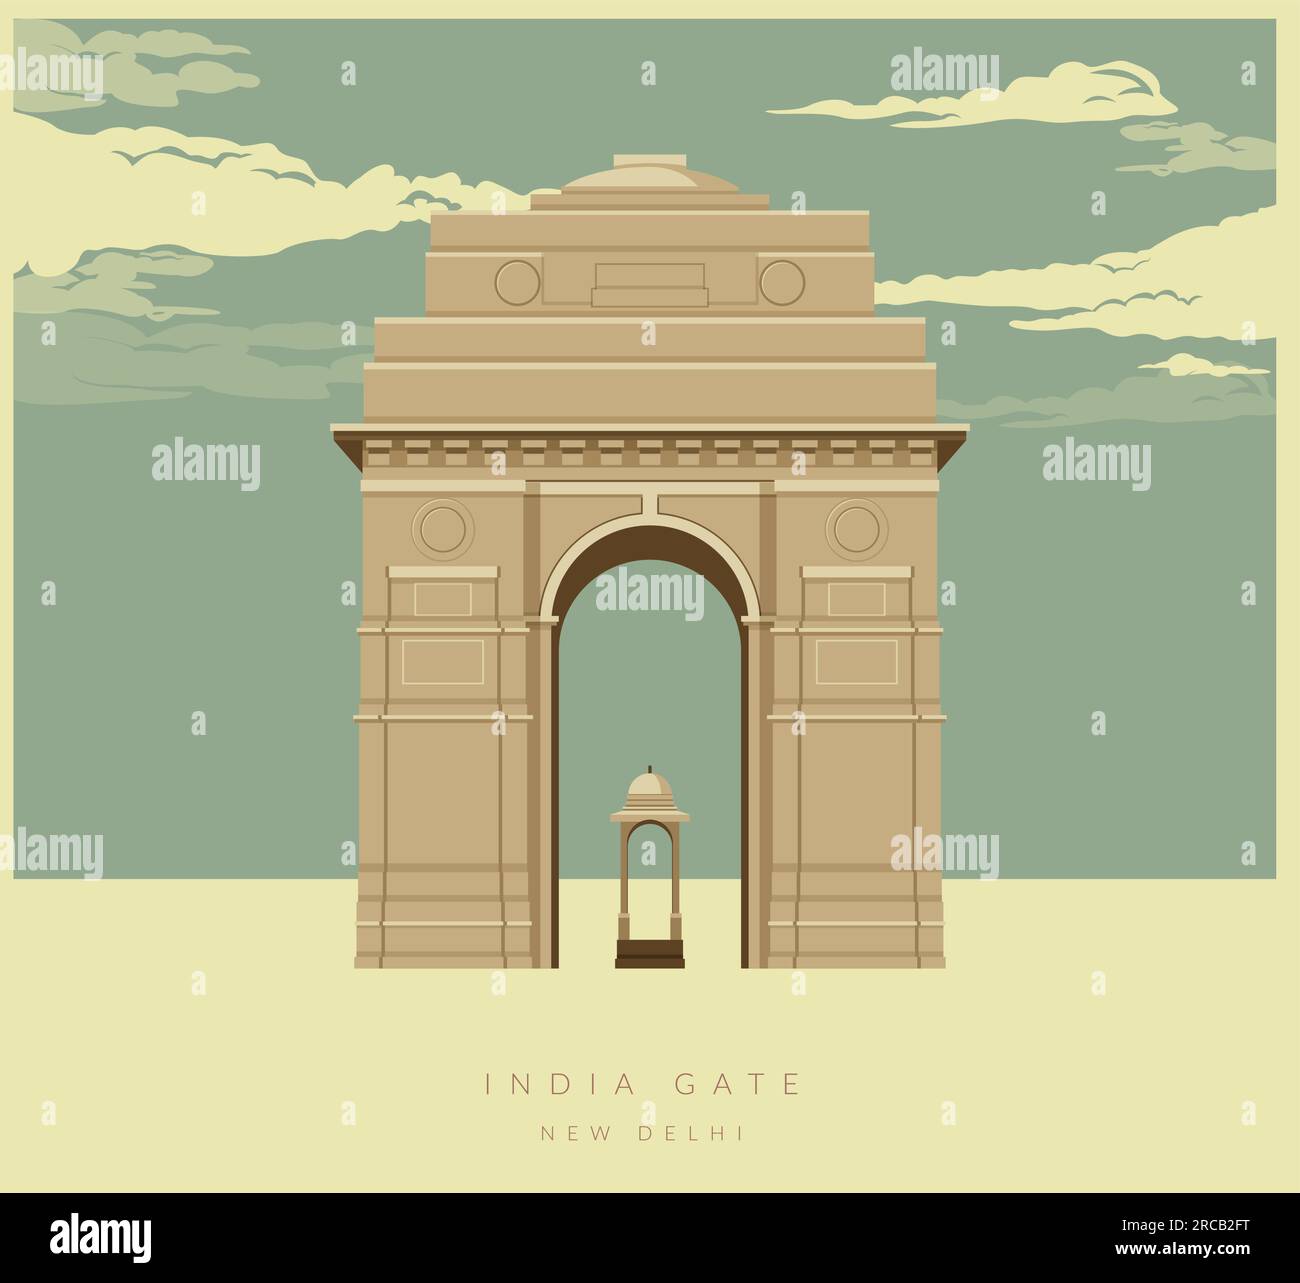 Historische Ikone - India Gate - Ein Kriegsdenkmal , Neu Delhi - Ikone Illustration als EPS 10 Datei Stock Vektor